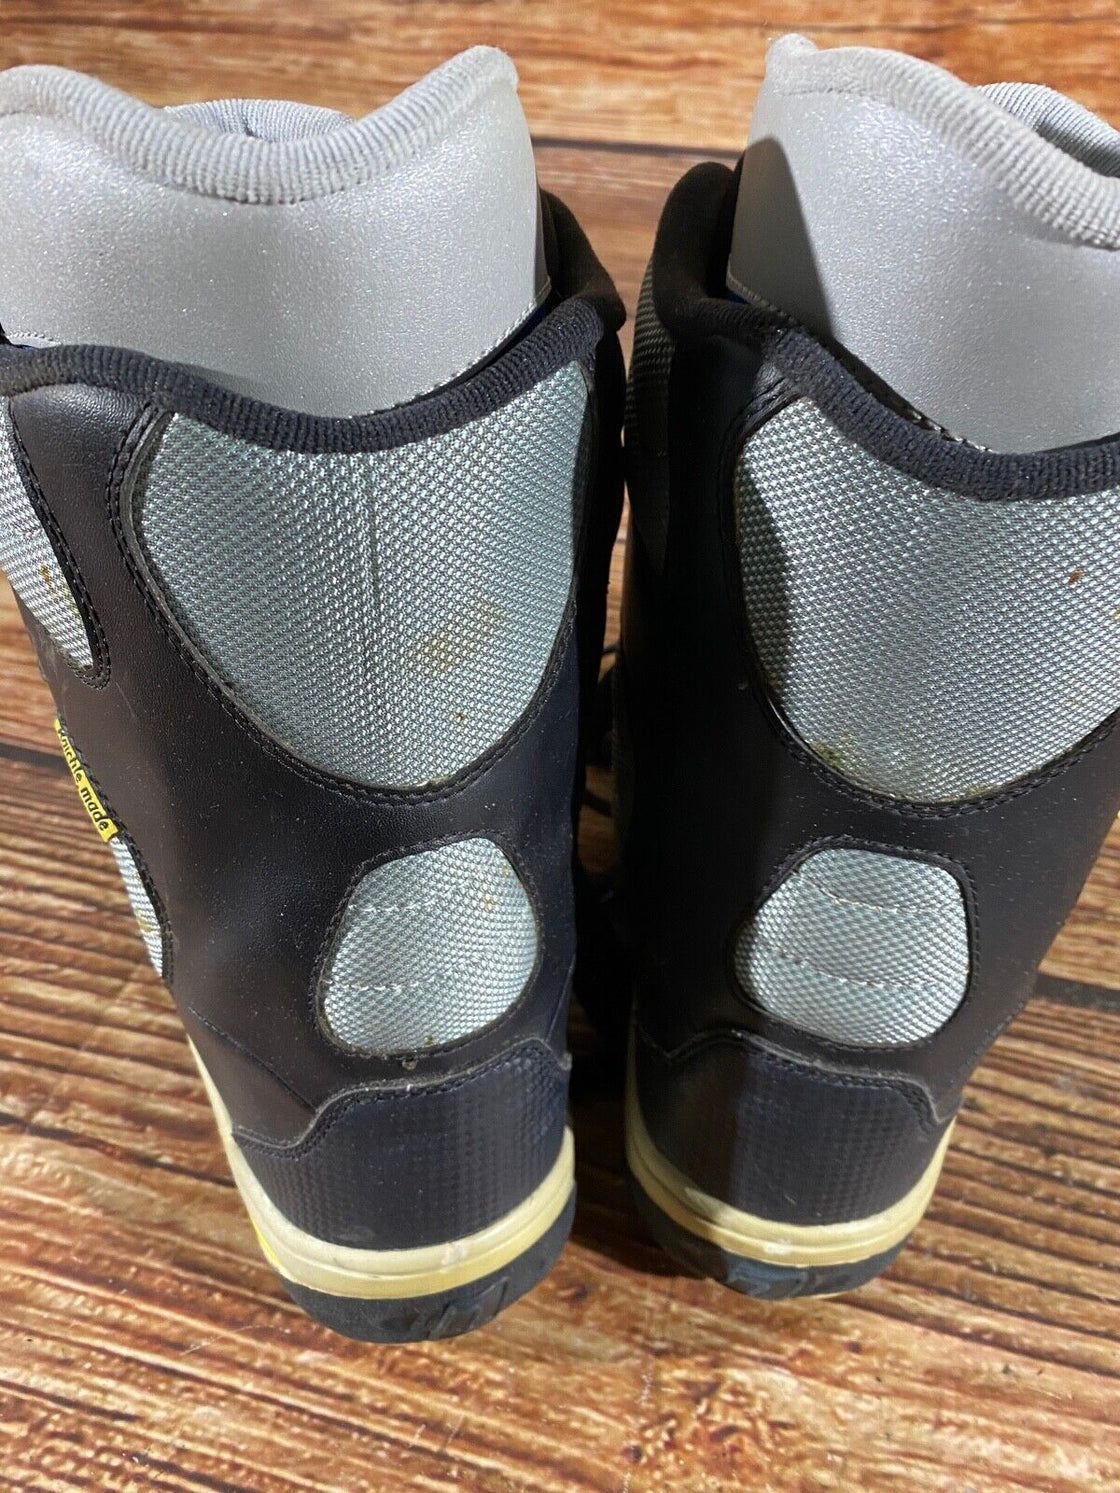 DEELUXE Snowboard Boots Size EU41, US8.5, UK7.5, Mondo 260 mm D